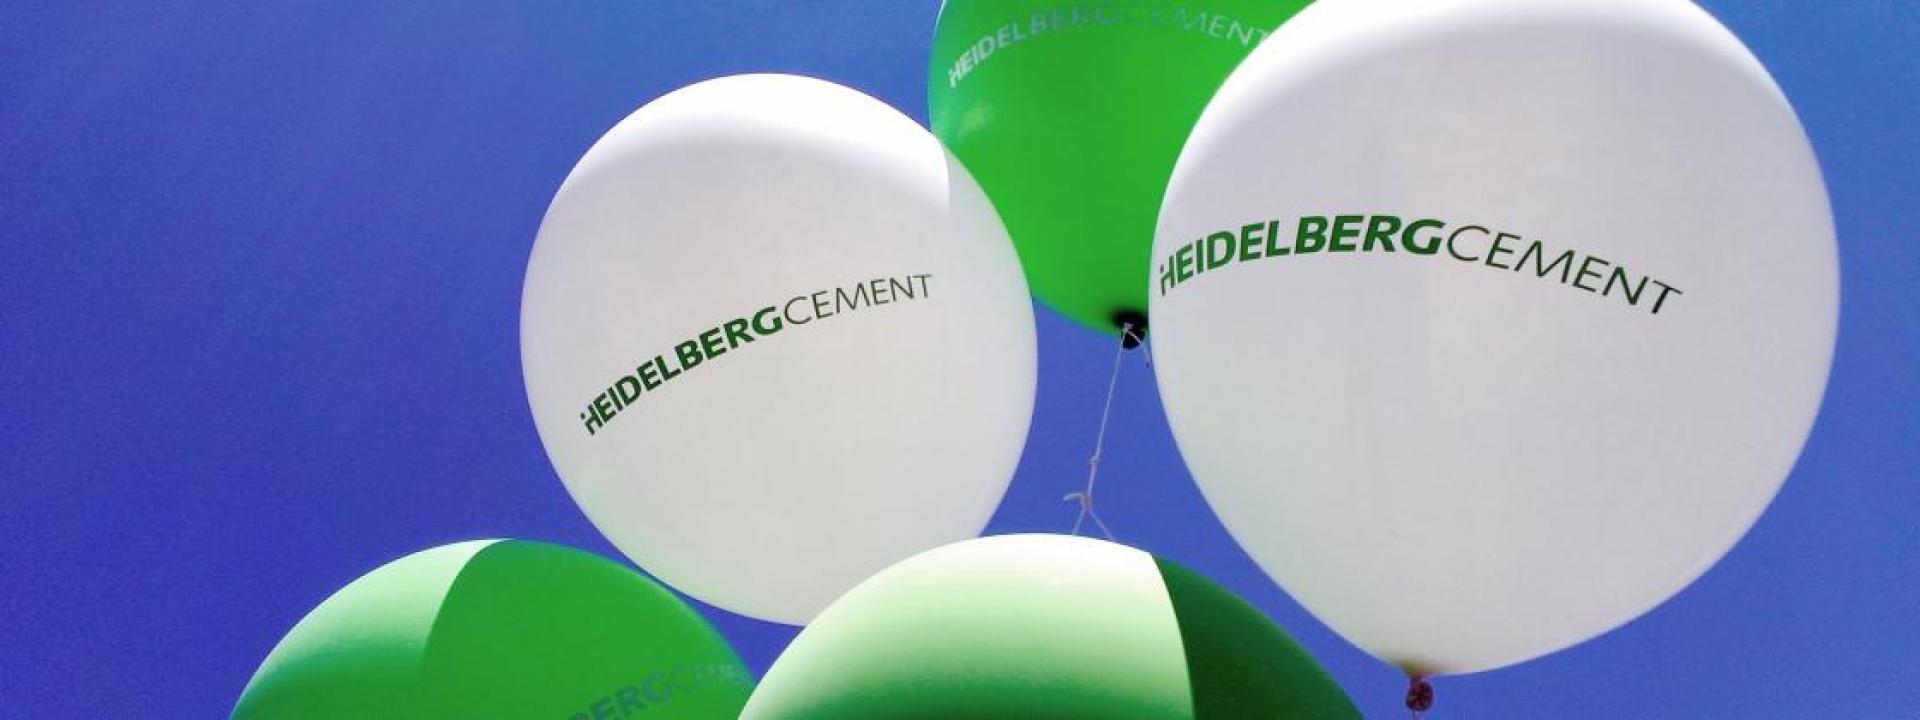 HeidelbergCement balloons. 